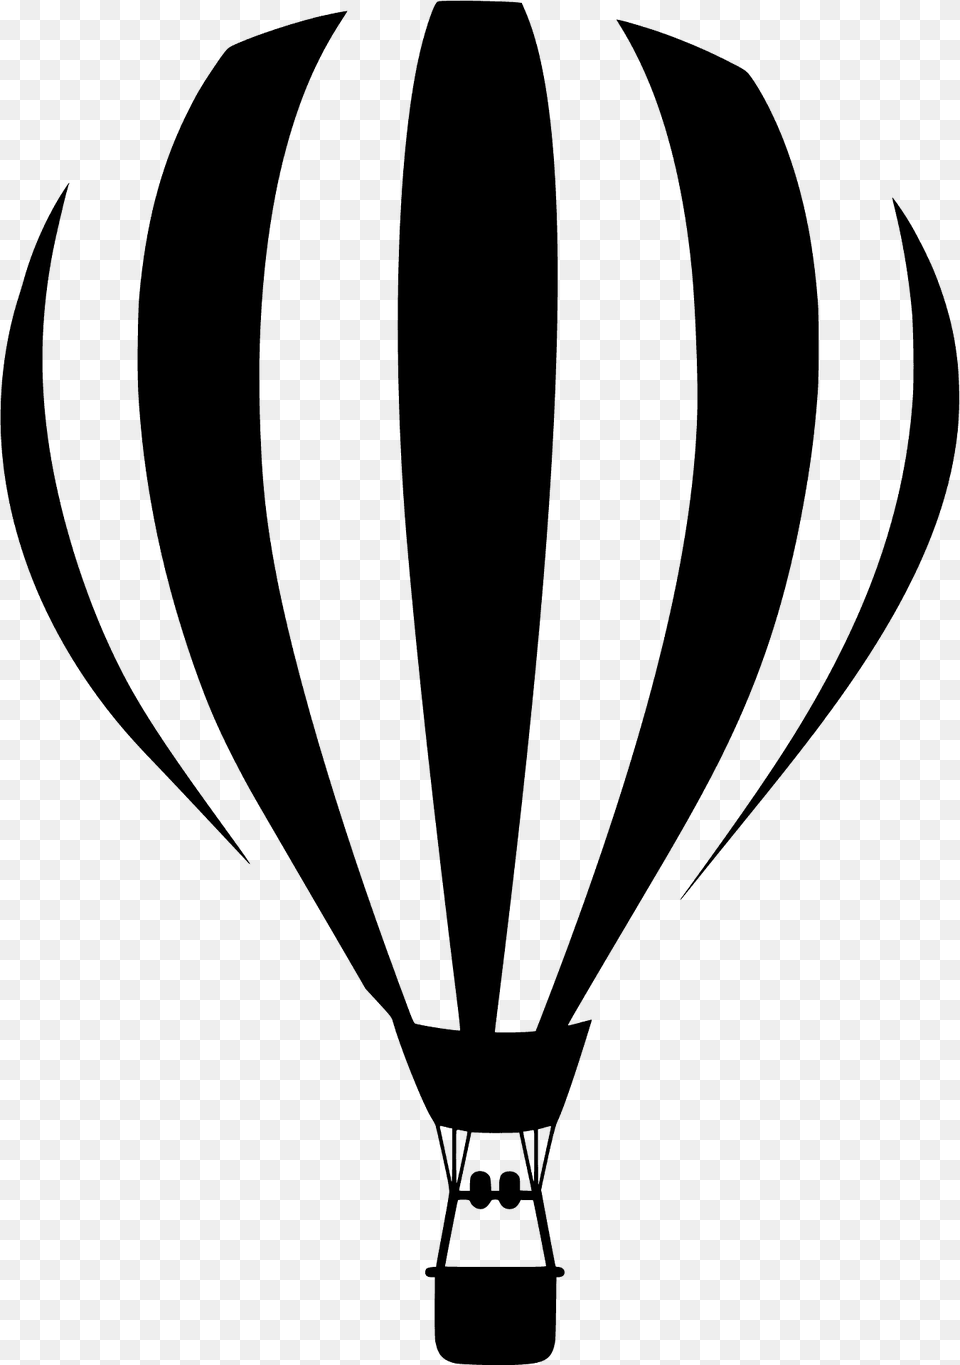 Hot Air Balloon Silhouette, Aircraft, Hot Air Balloon, Transportation, Vehicle Png Image